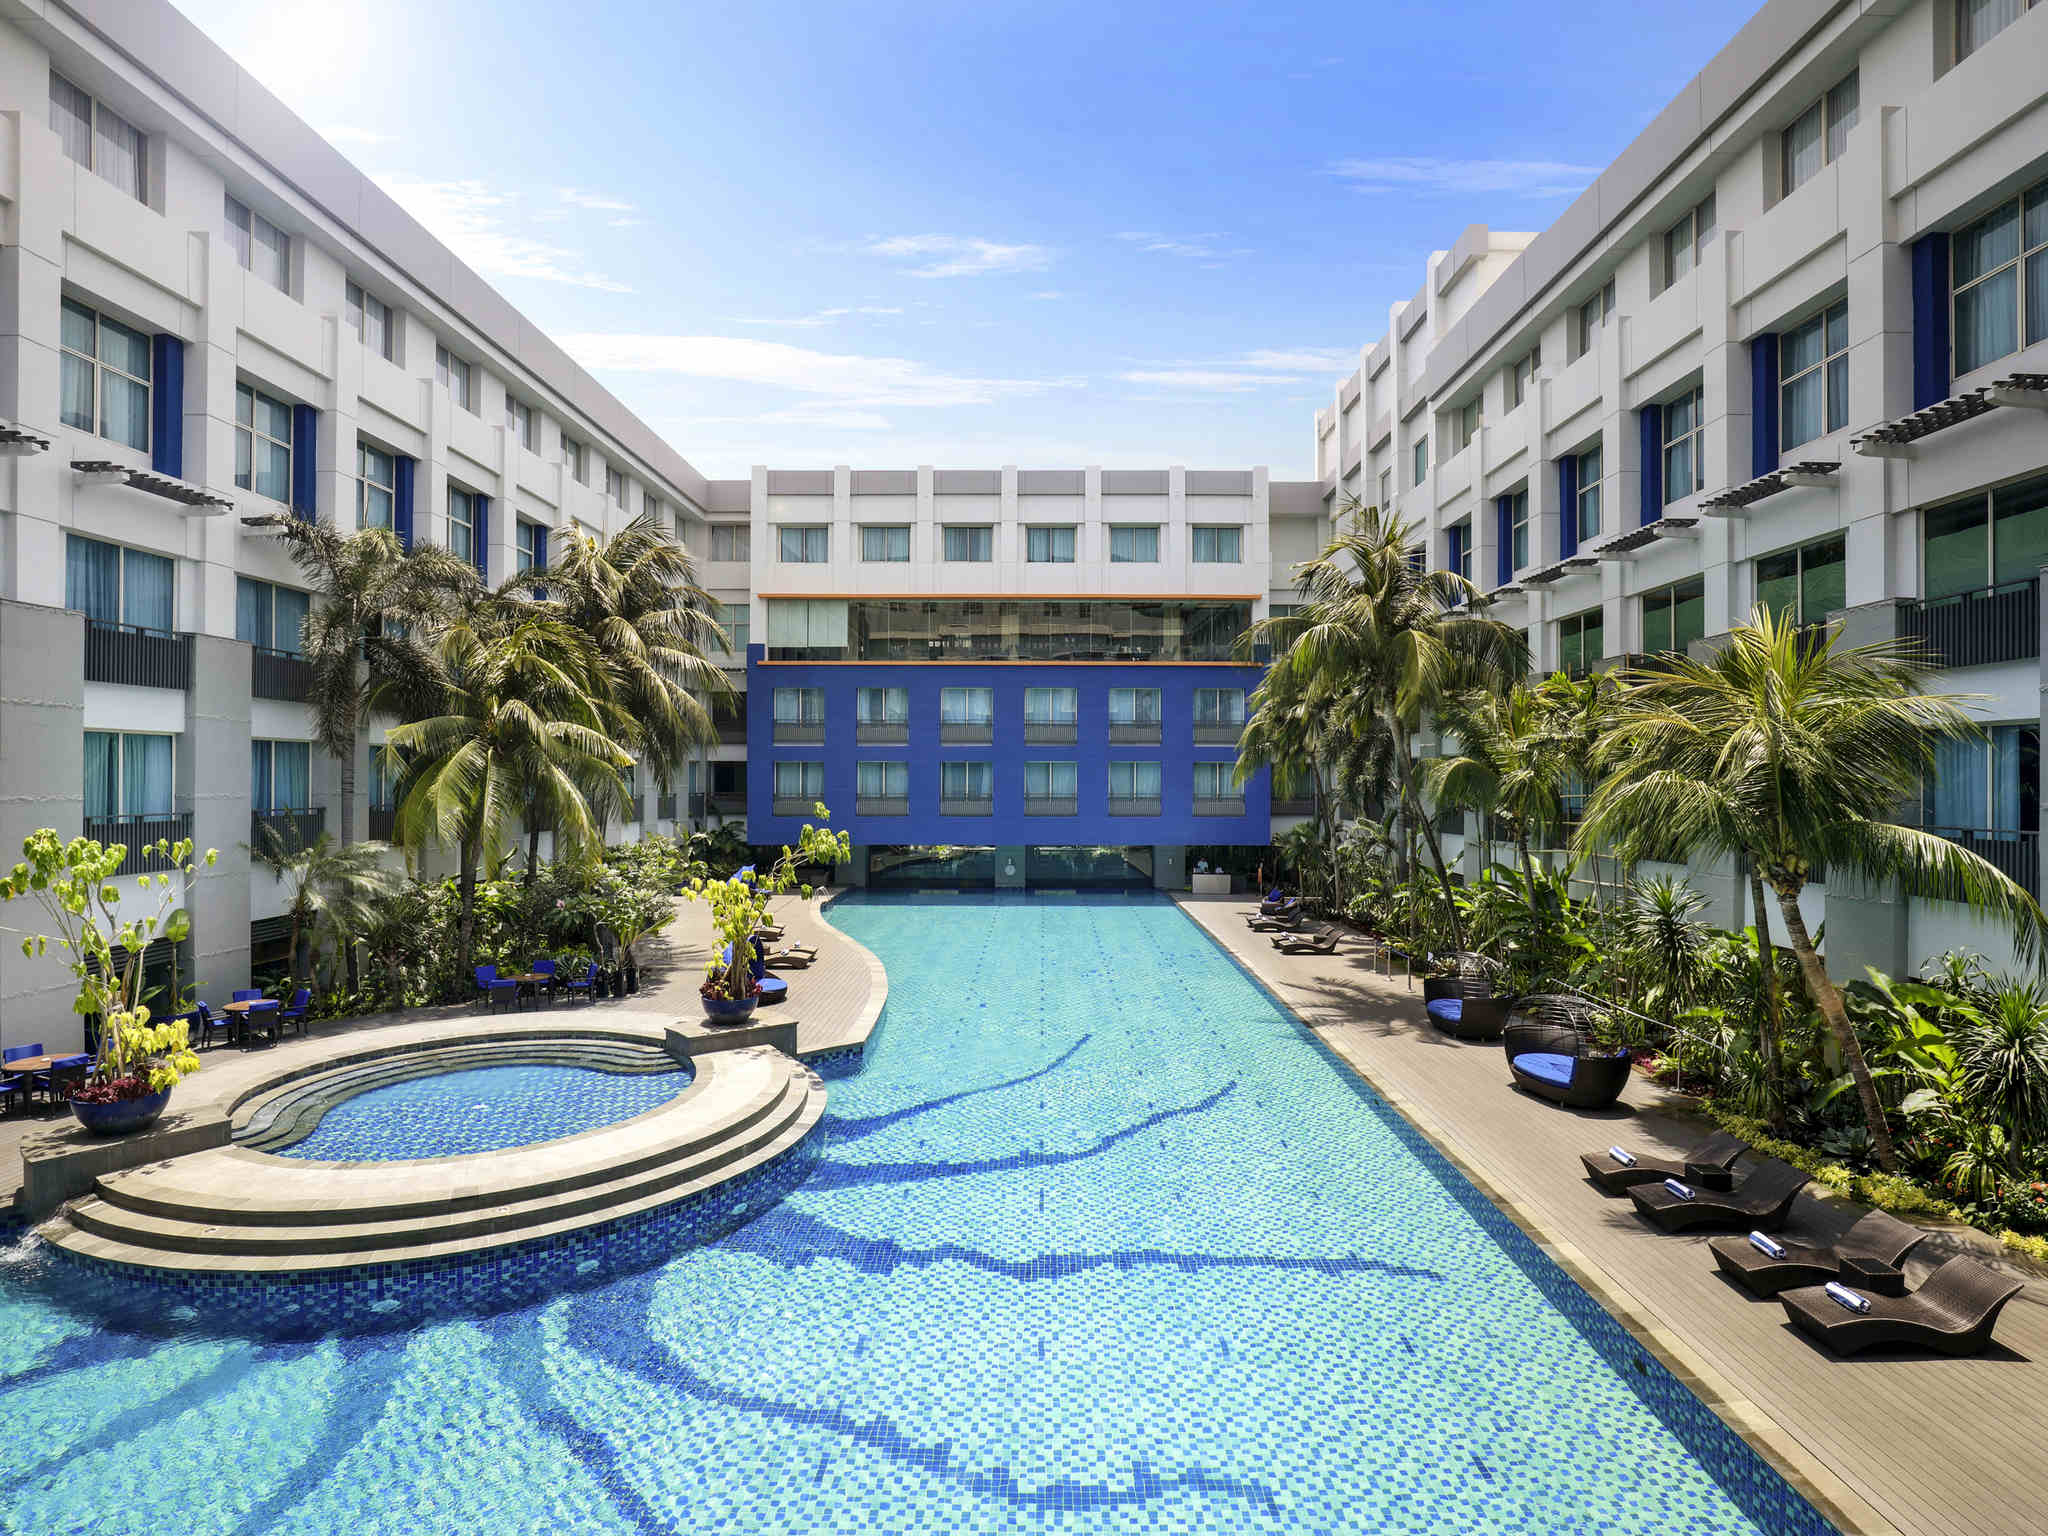 Pertumbuhan Jumlah Hotel di Jakarta, Nomor 3 Terbesar di Asia - MLDSPOT